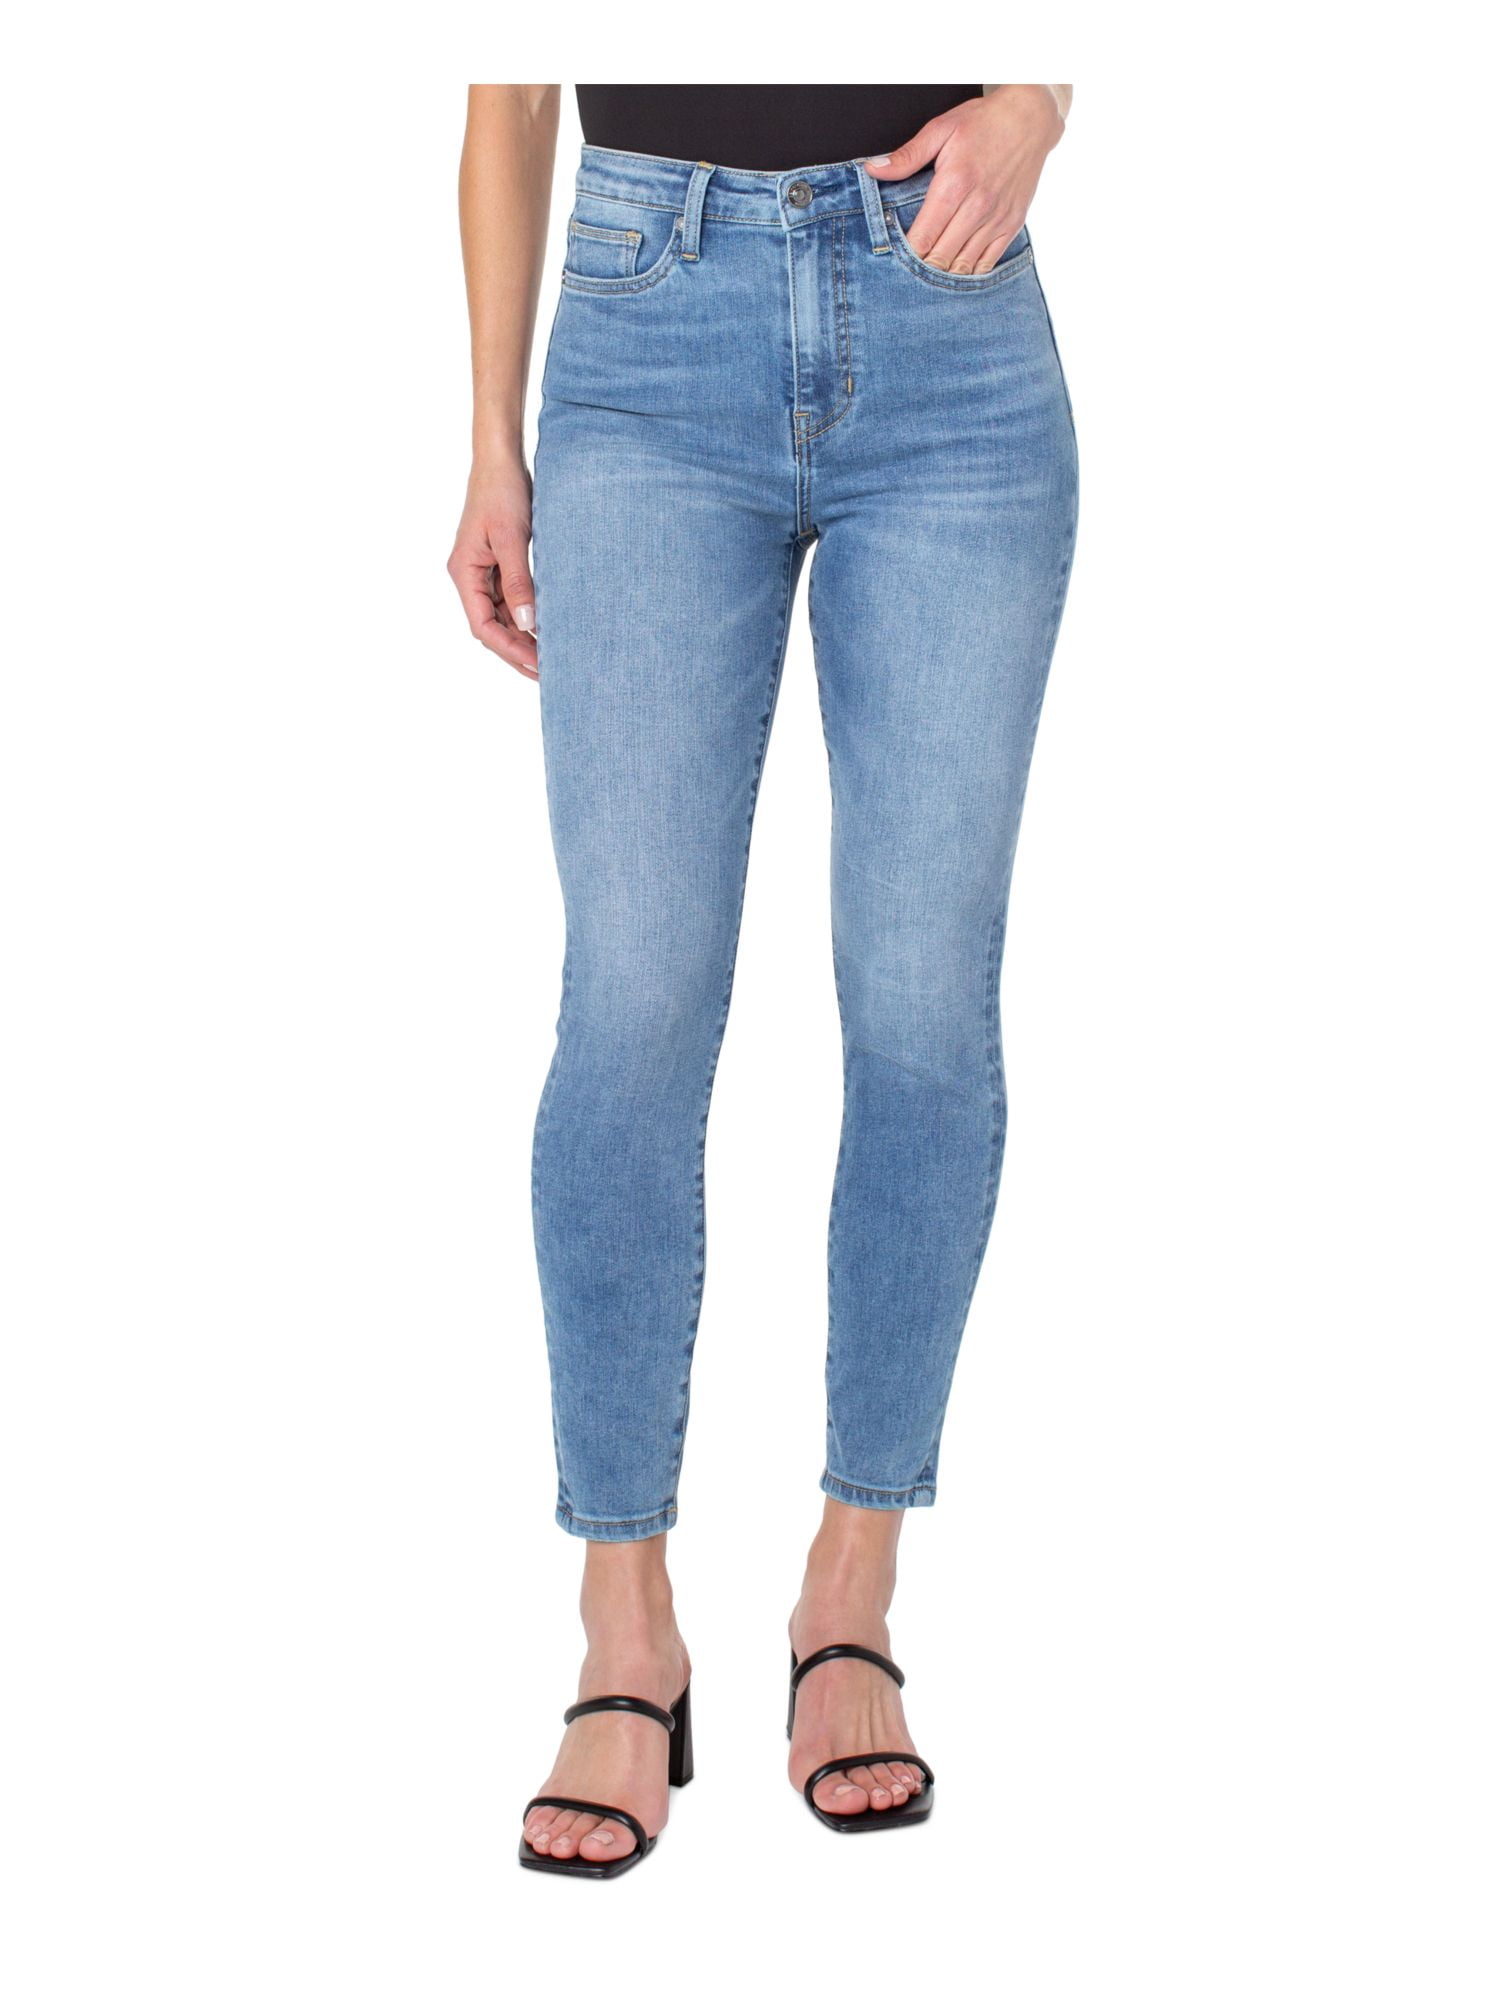 Earnest Sewn Jeans Sample Sale! : DenimBlog